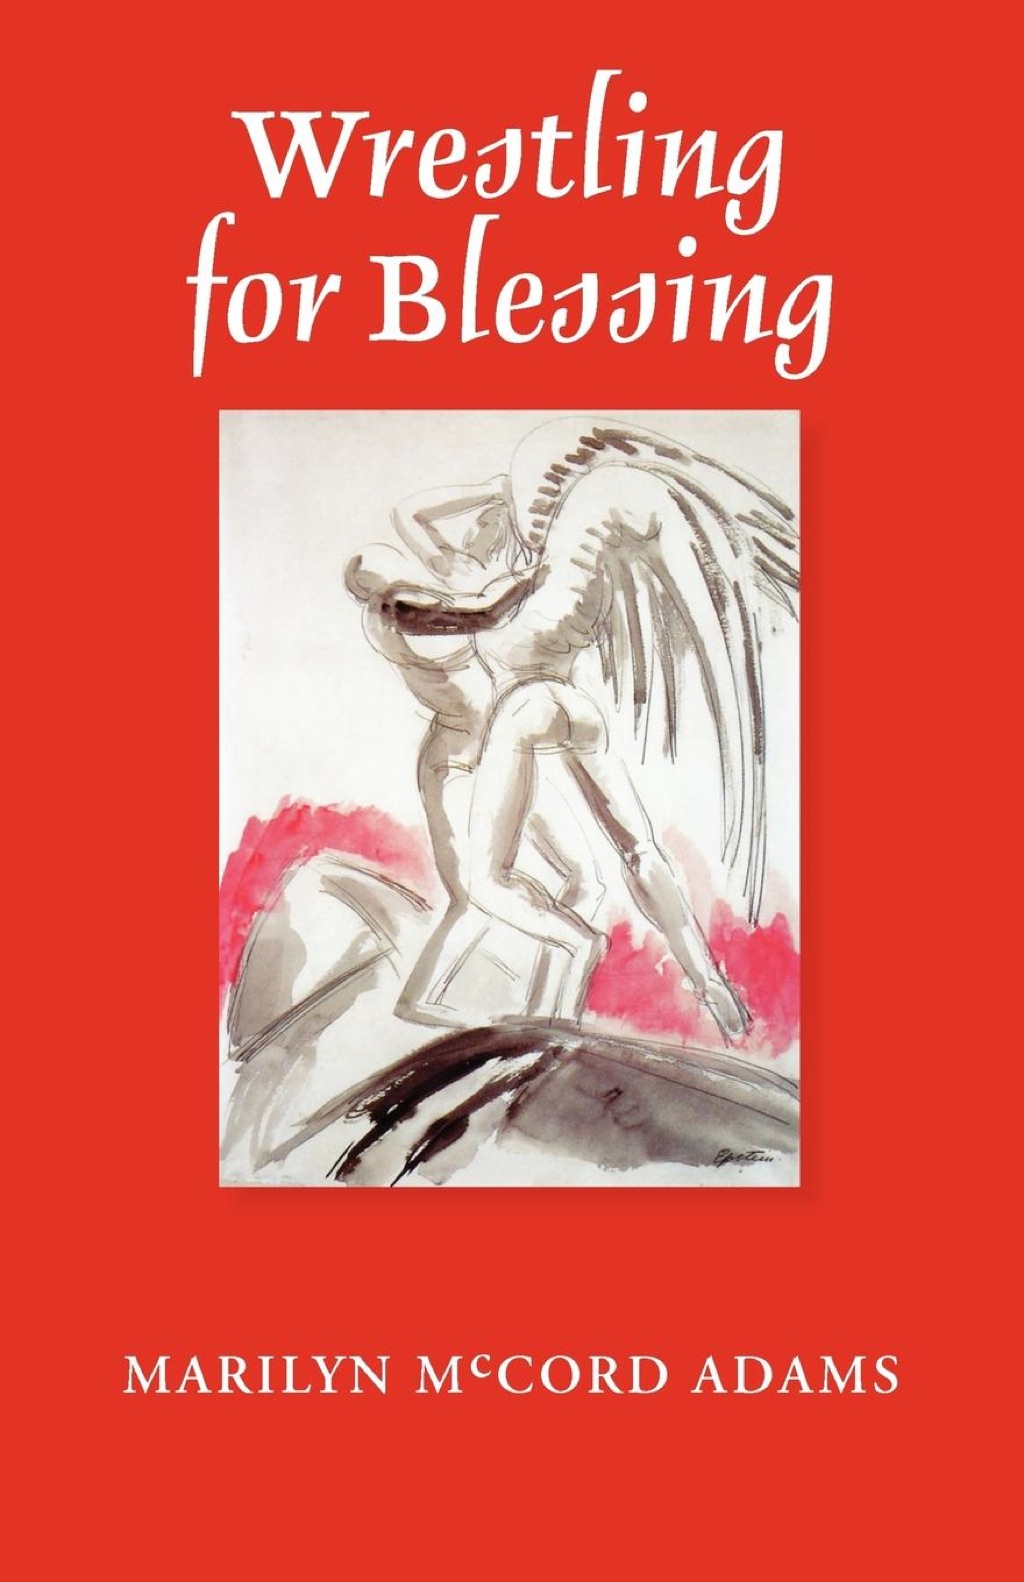 Wrestling for Blessing (eBook) - Marilyn McCord Adams,